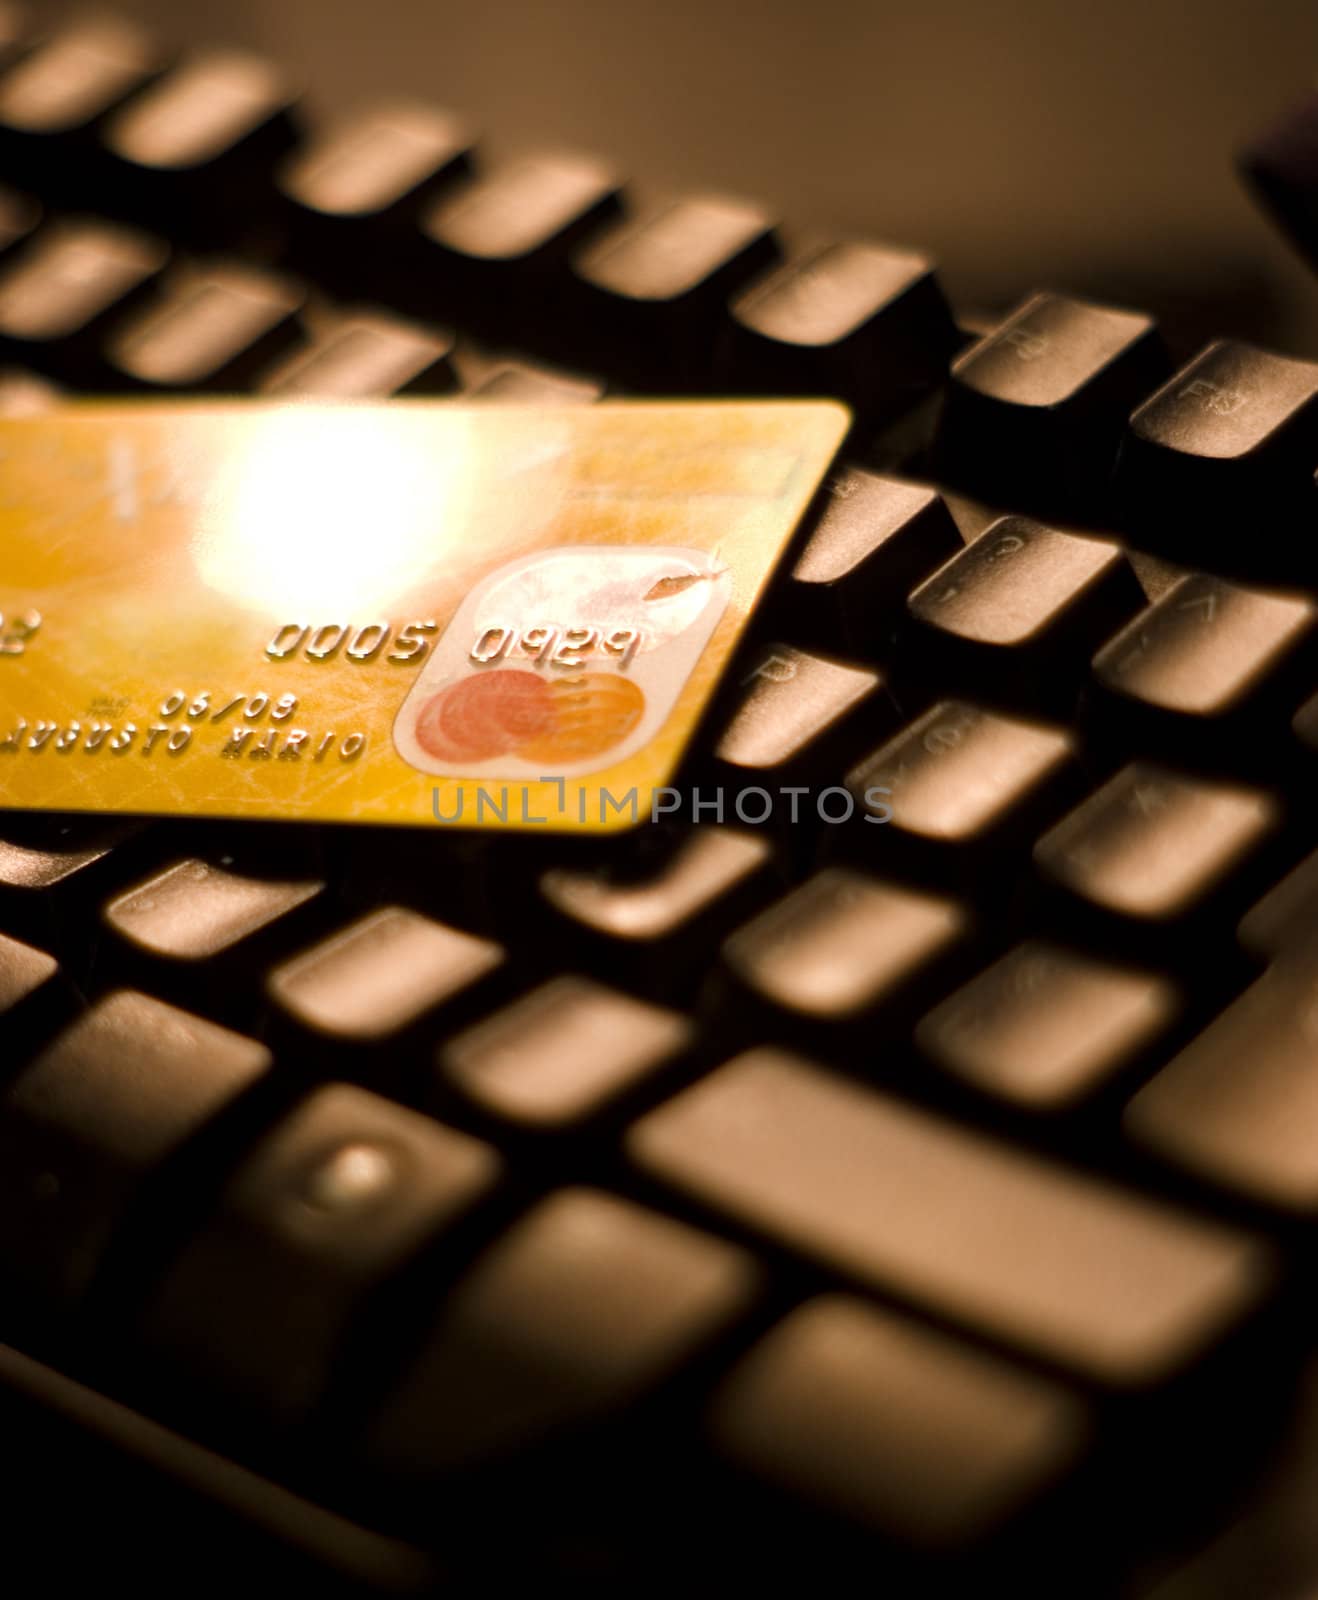 a credit card near the computer